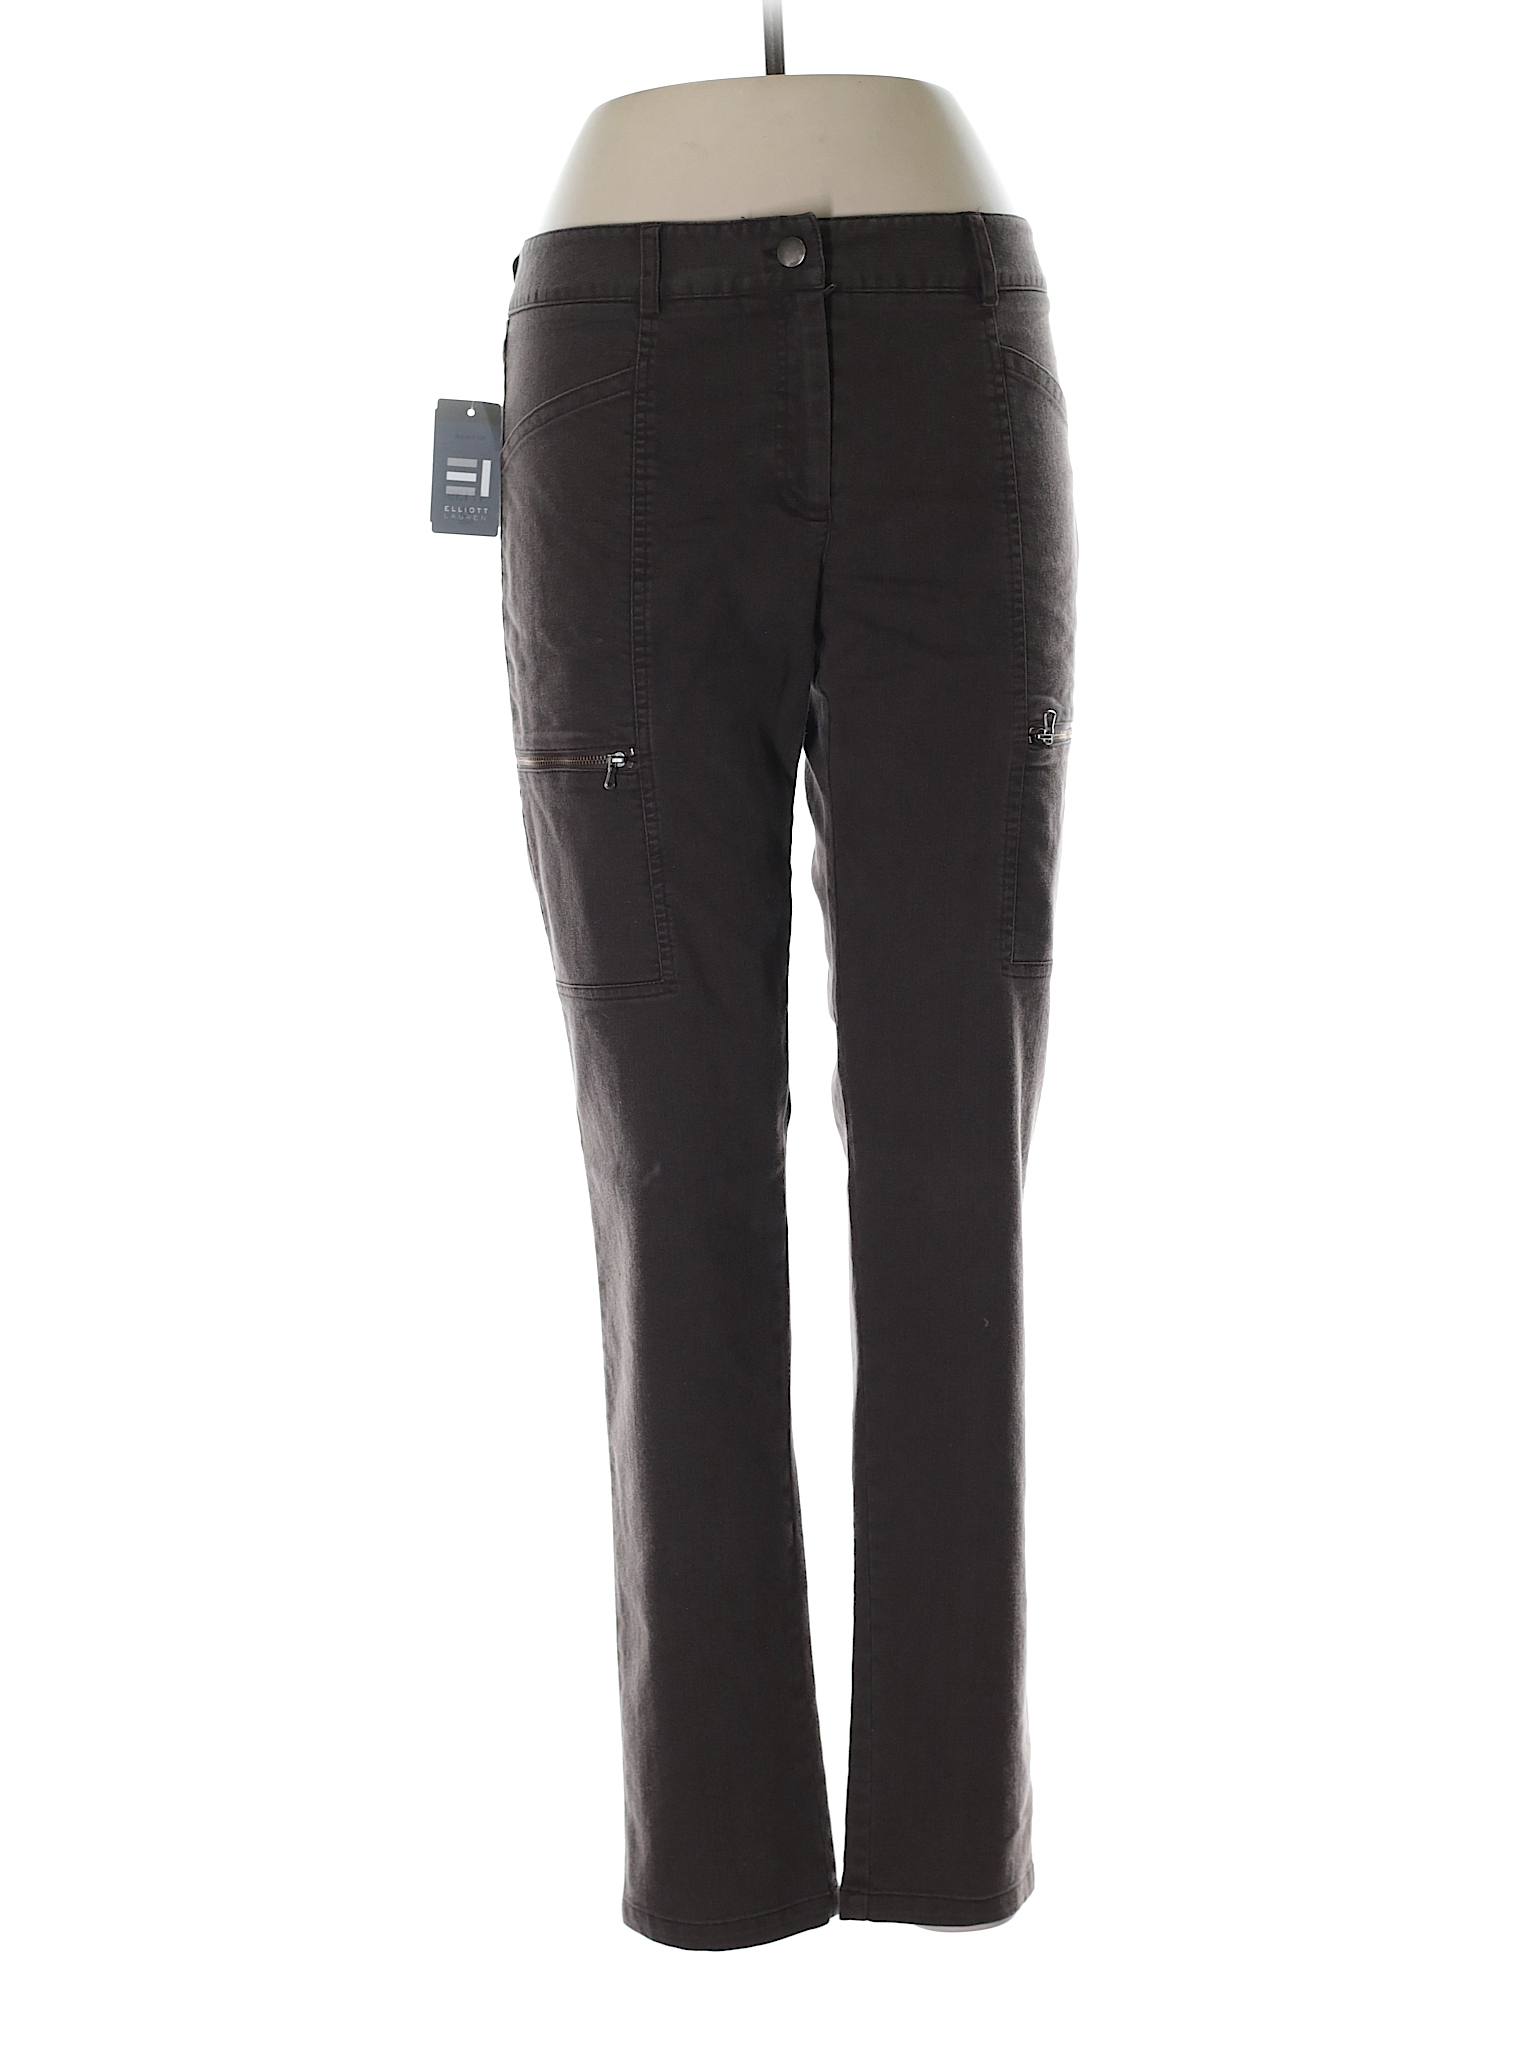 Elliott Lauren Solid Dark Green Jeans Size 6 - 92% off | thredUP